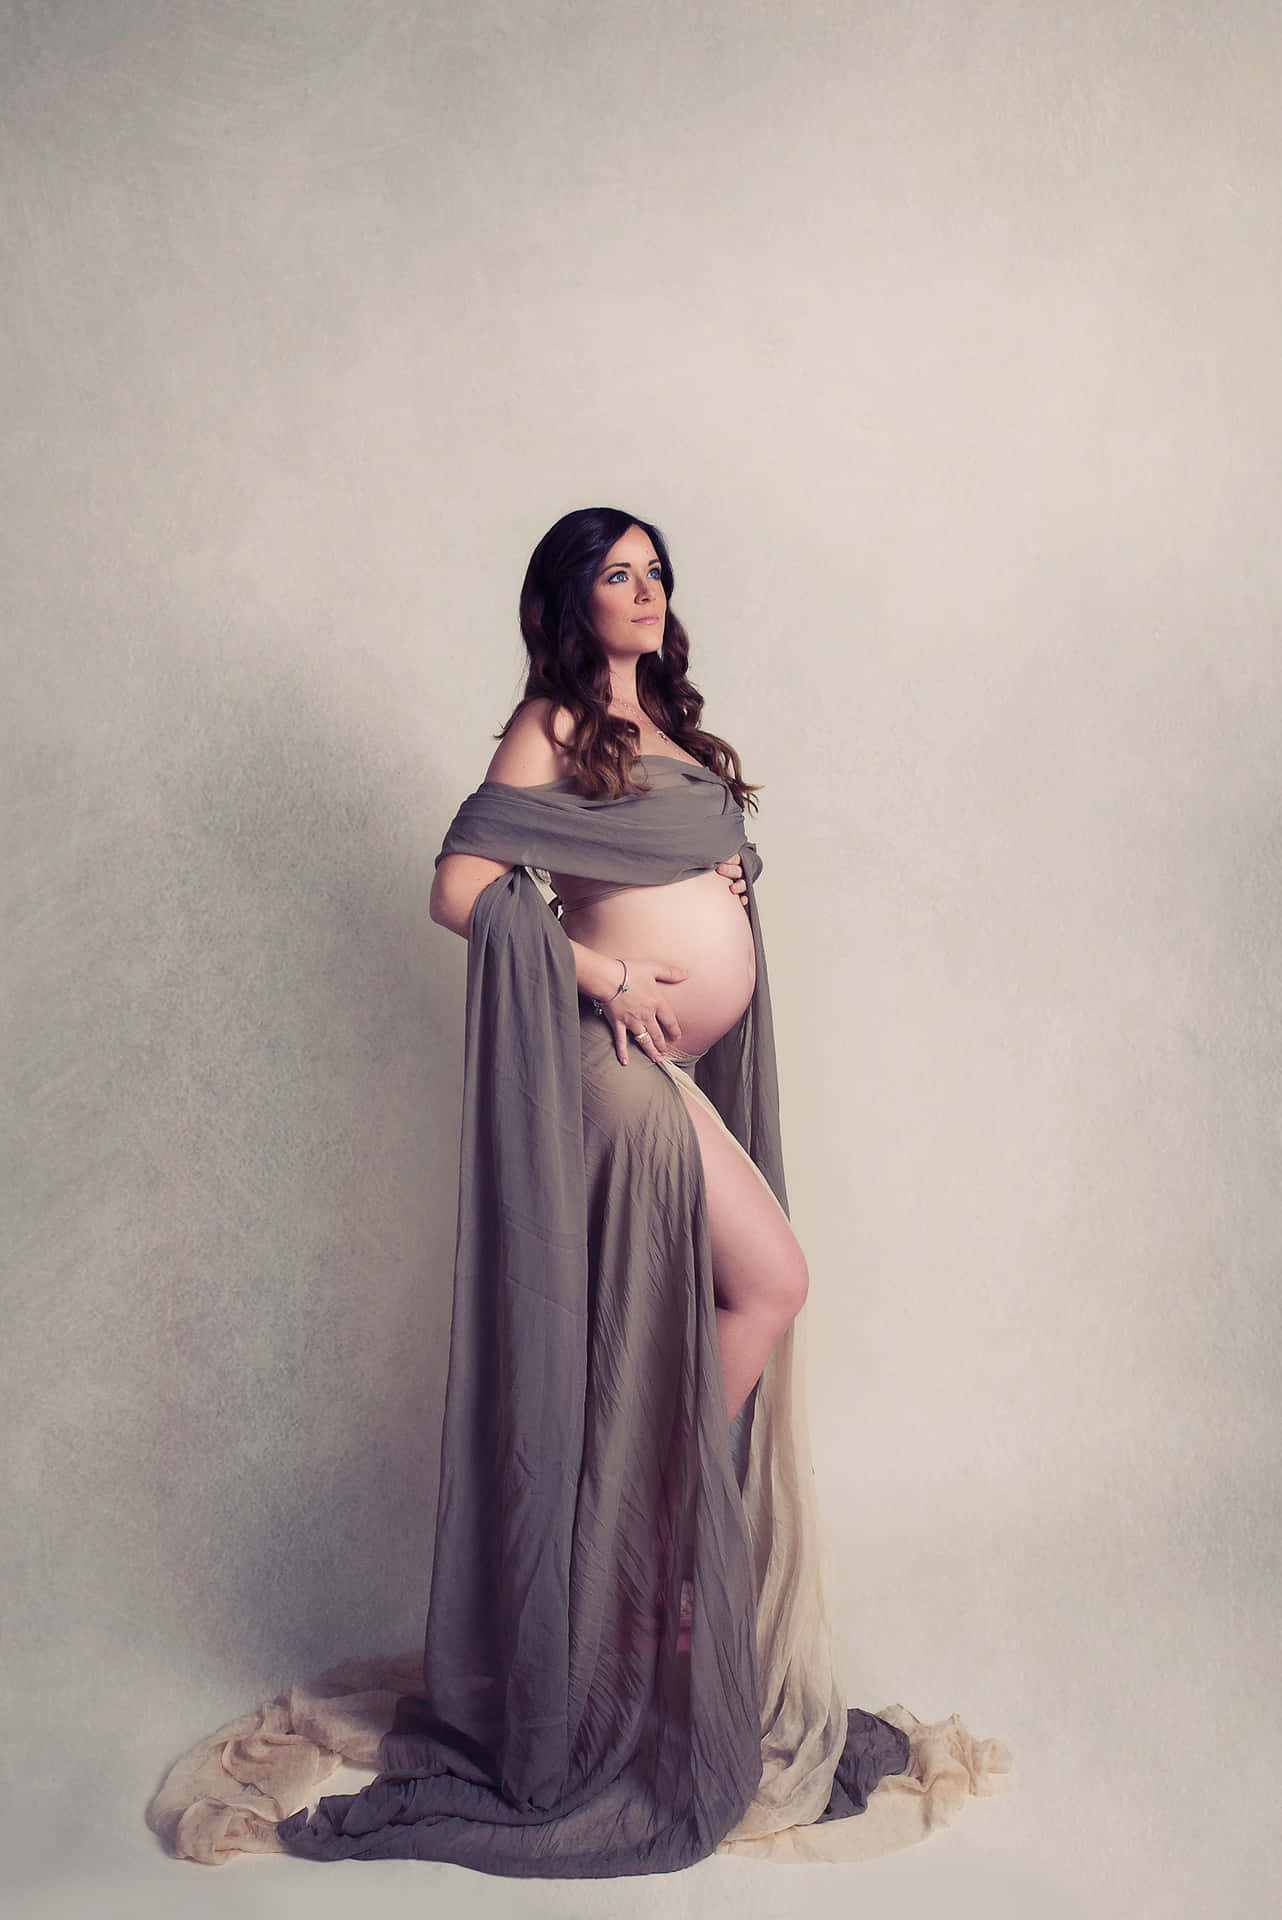 Fotoritratto Di Una Donna Incinta In Maternità.